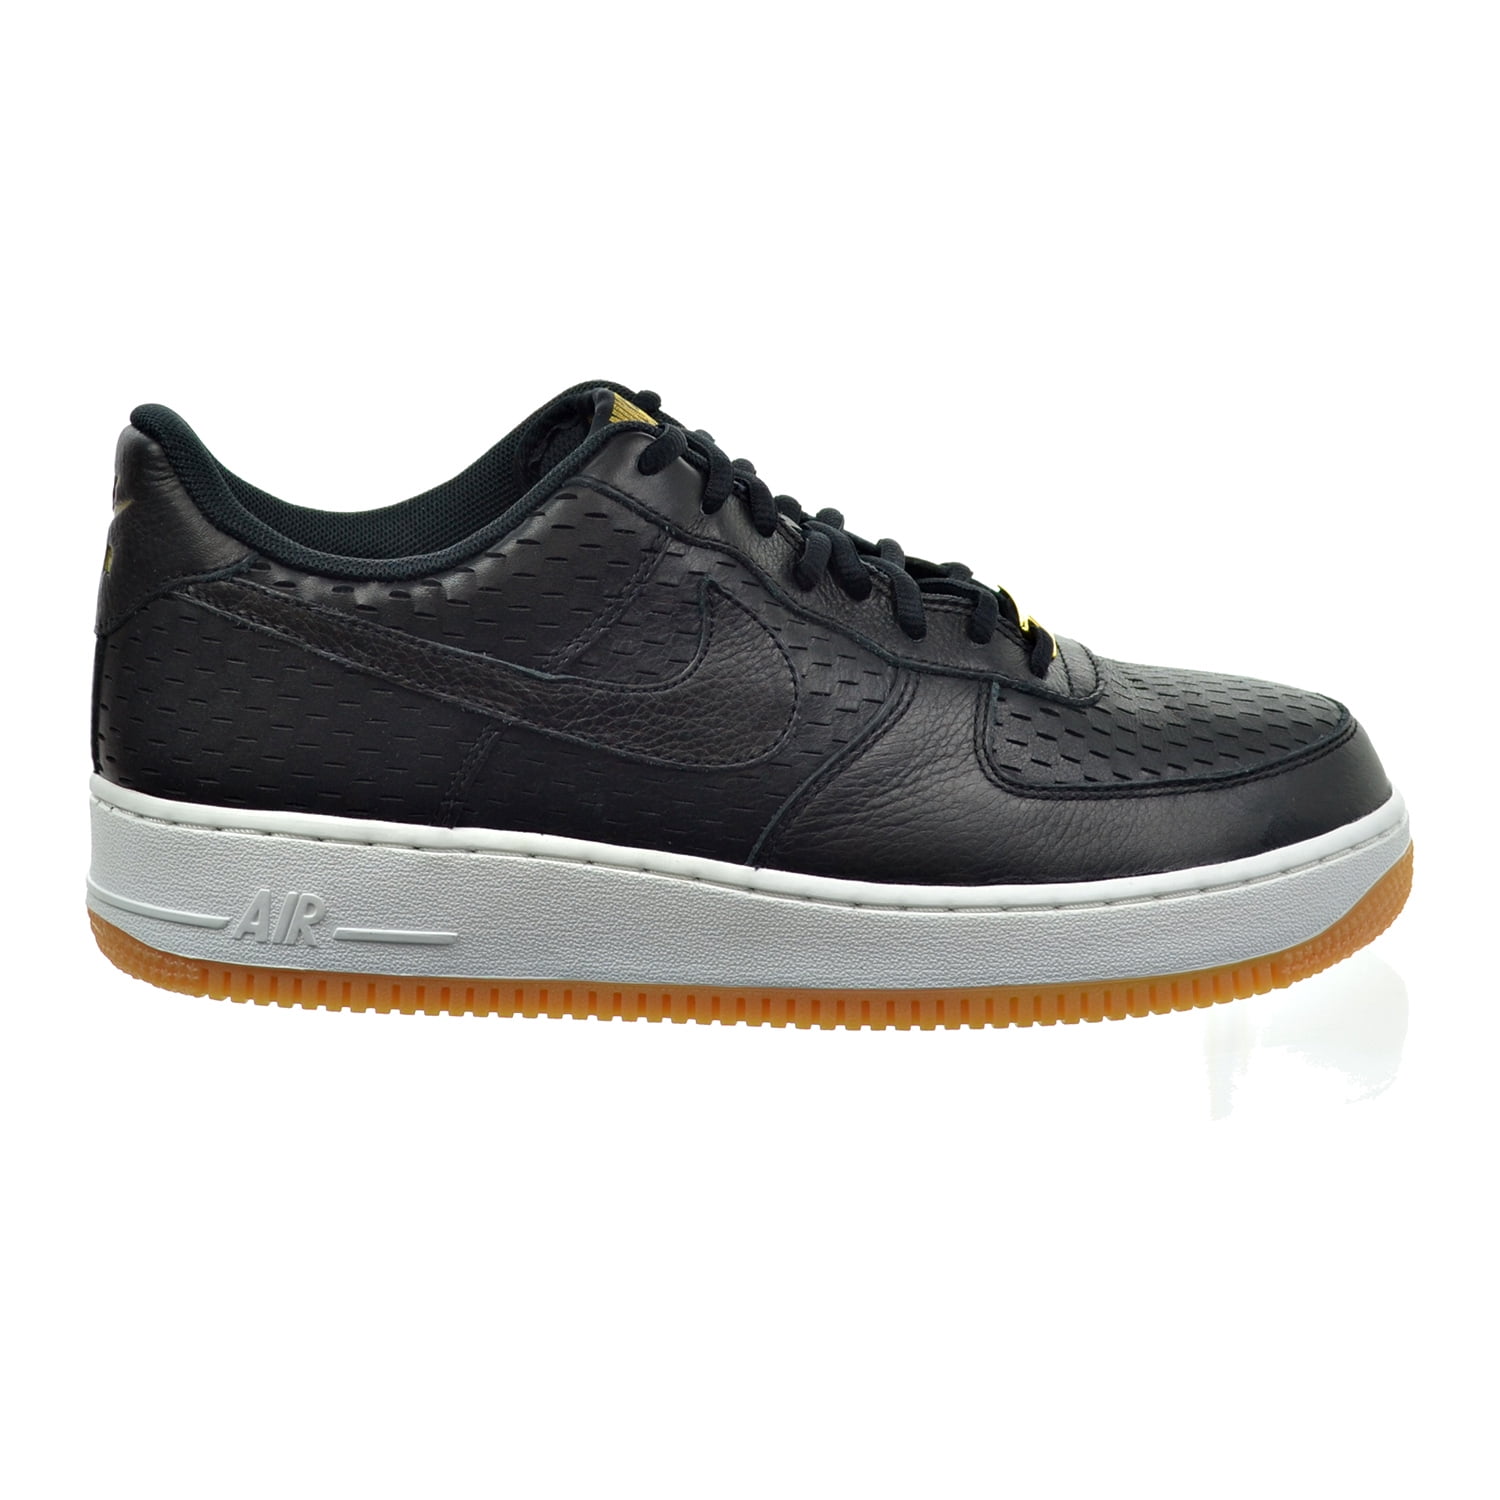 Nike Air Force 1 '07 Premium Women's Shoes Black/Summit White 616725-005